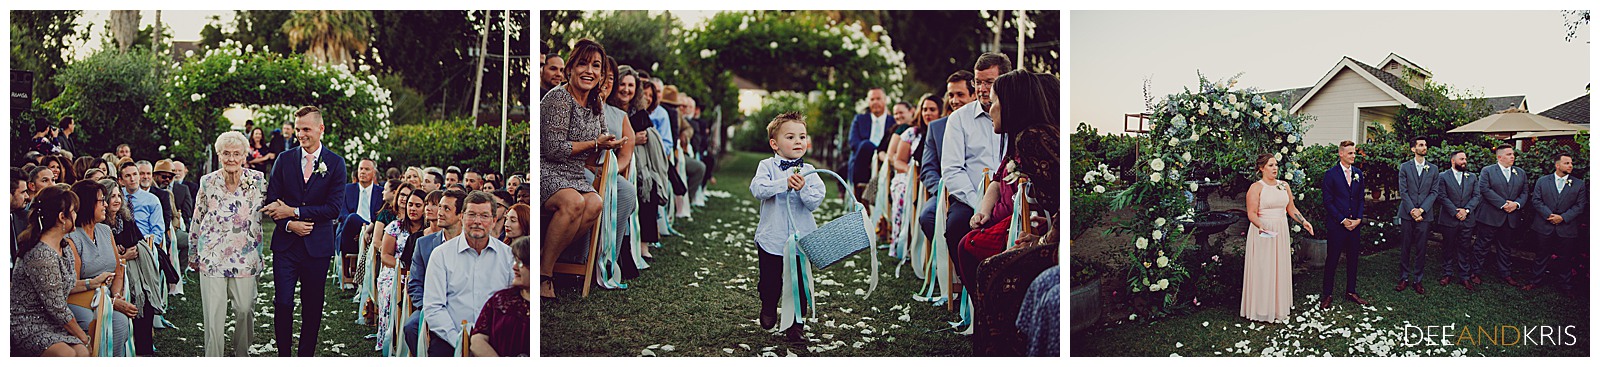 https://deeandkrisphotography.com/sacramento-winery-wedding/